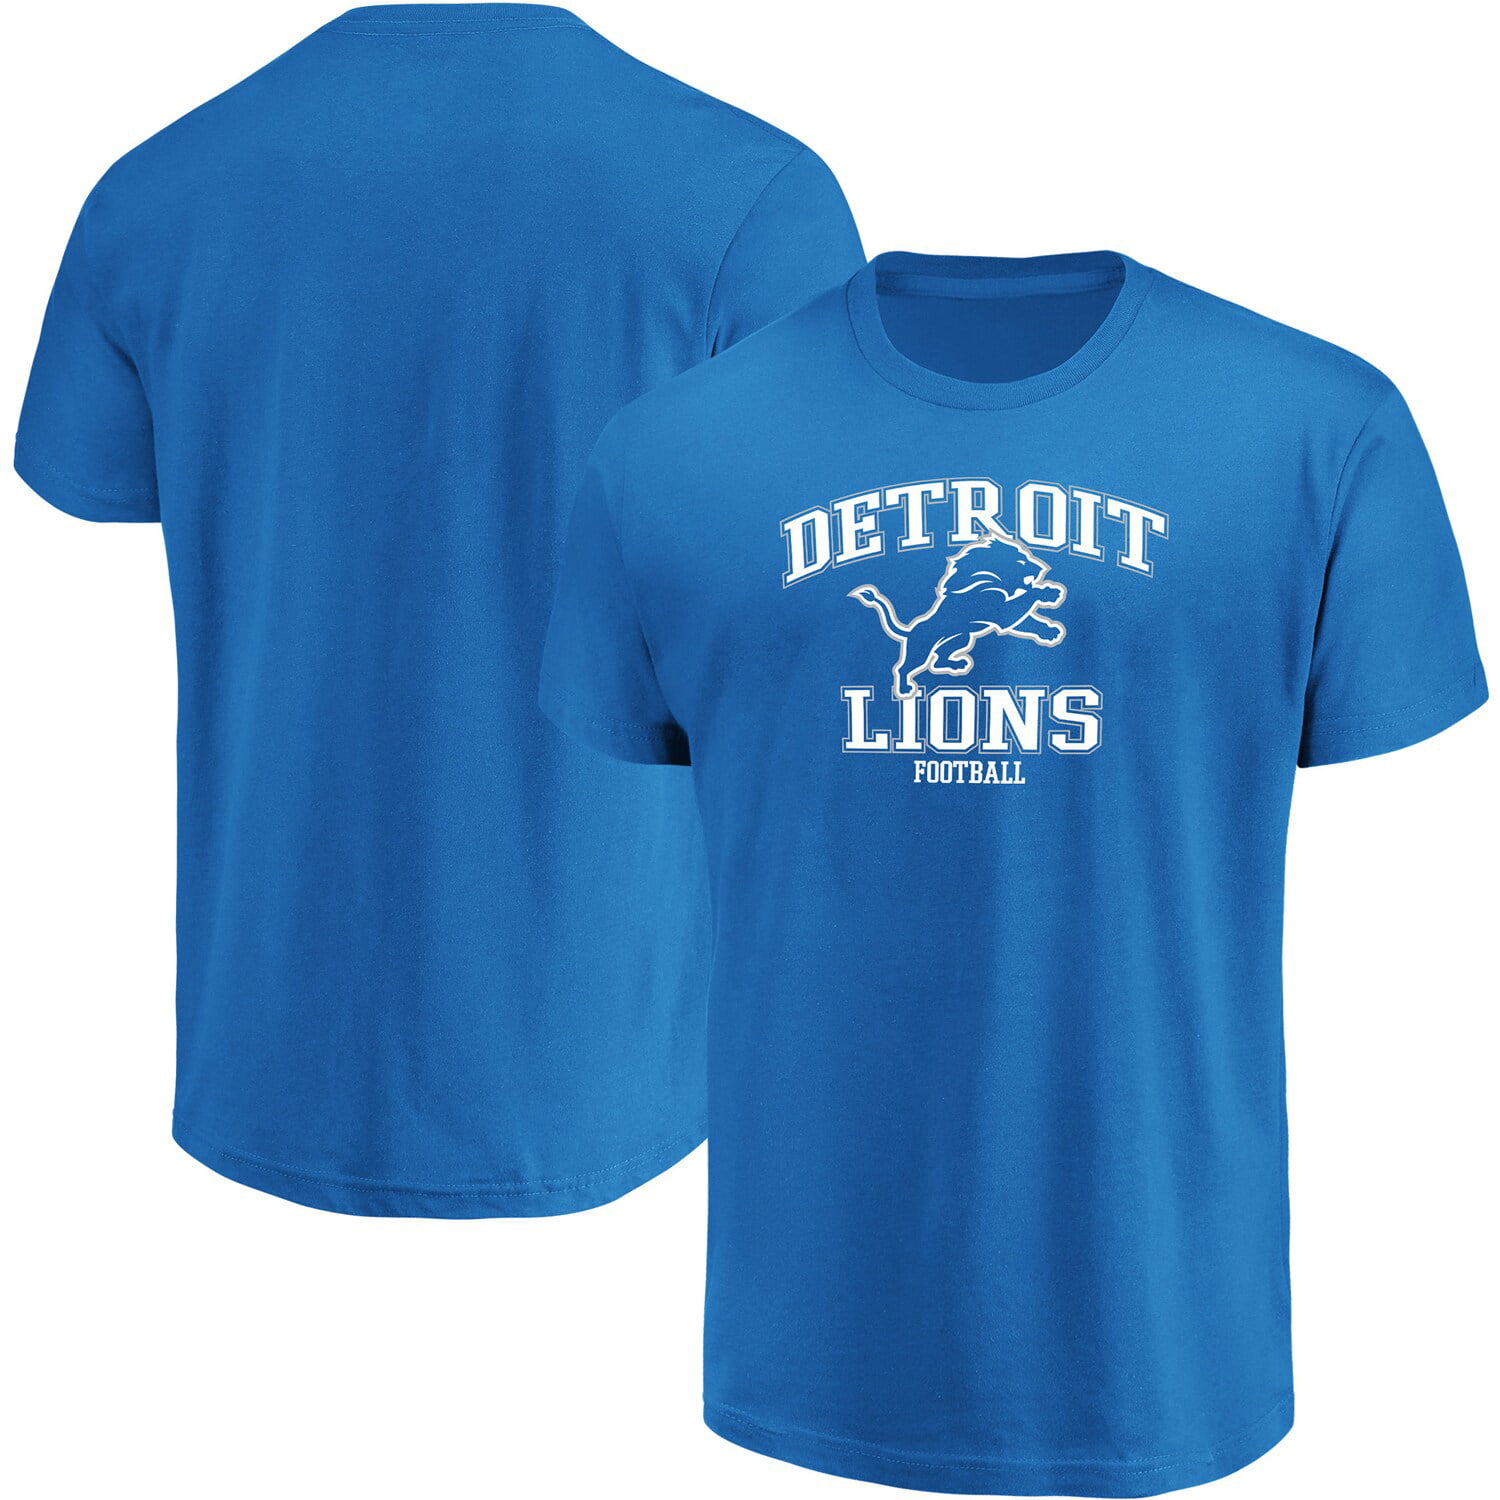 detroit lions shirts at meijer